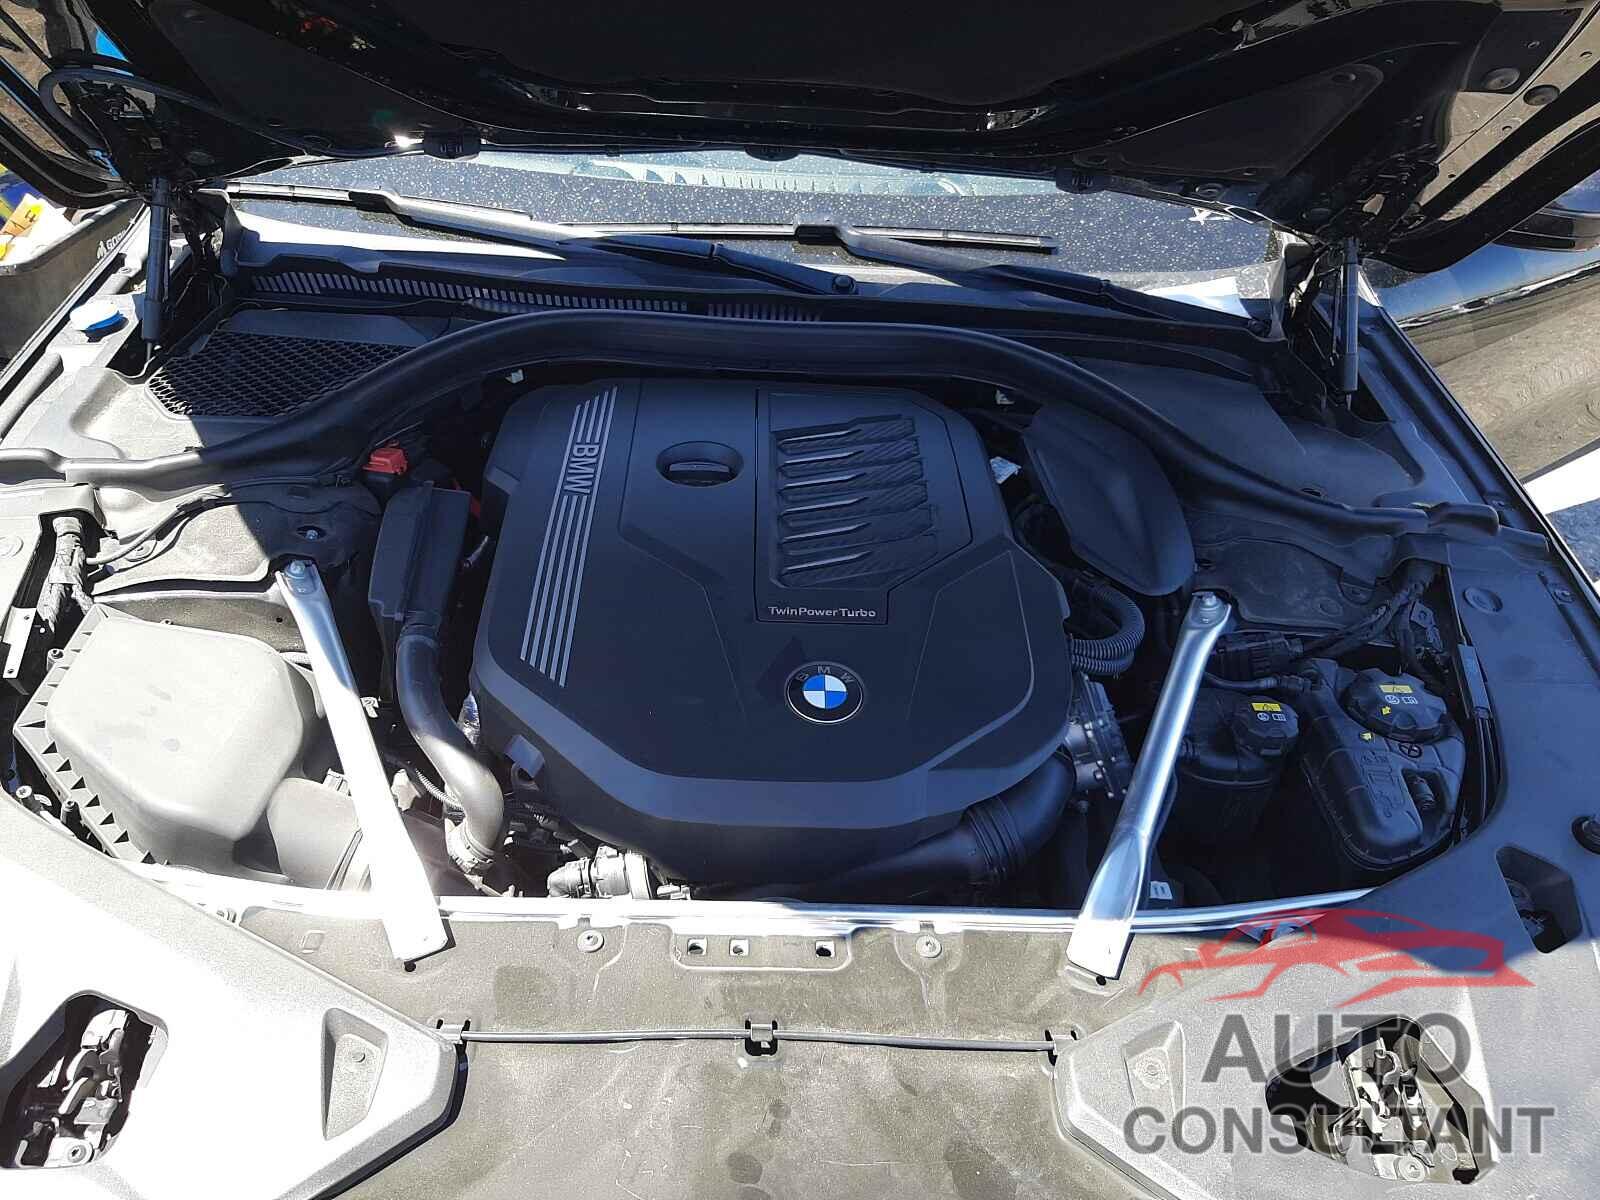 BMW 8 SERIES 2020 - WBAAE2C05LCD01394